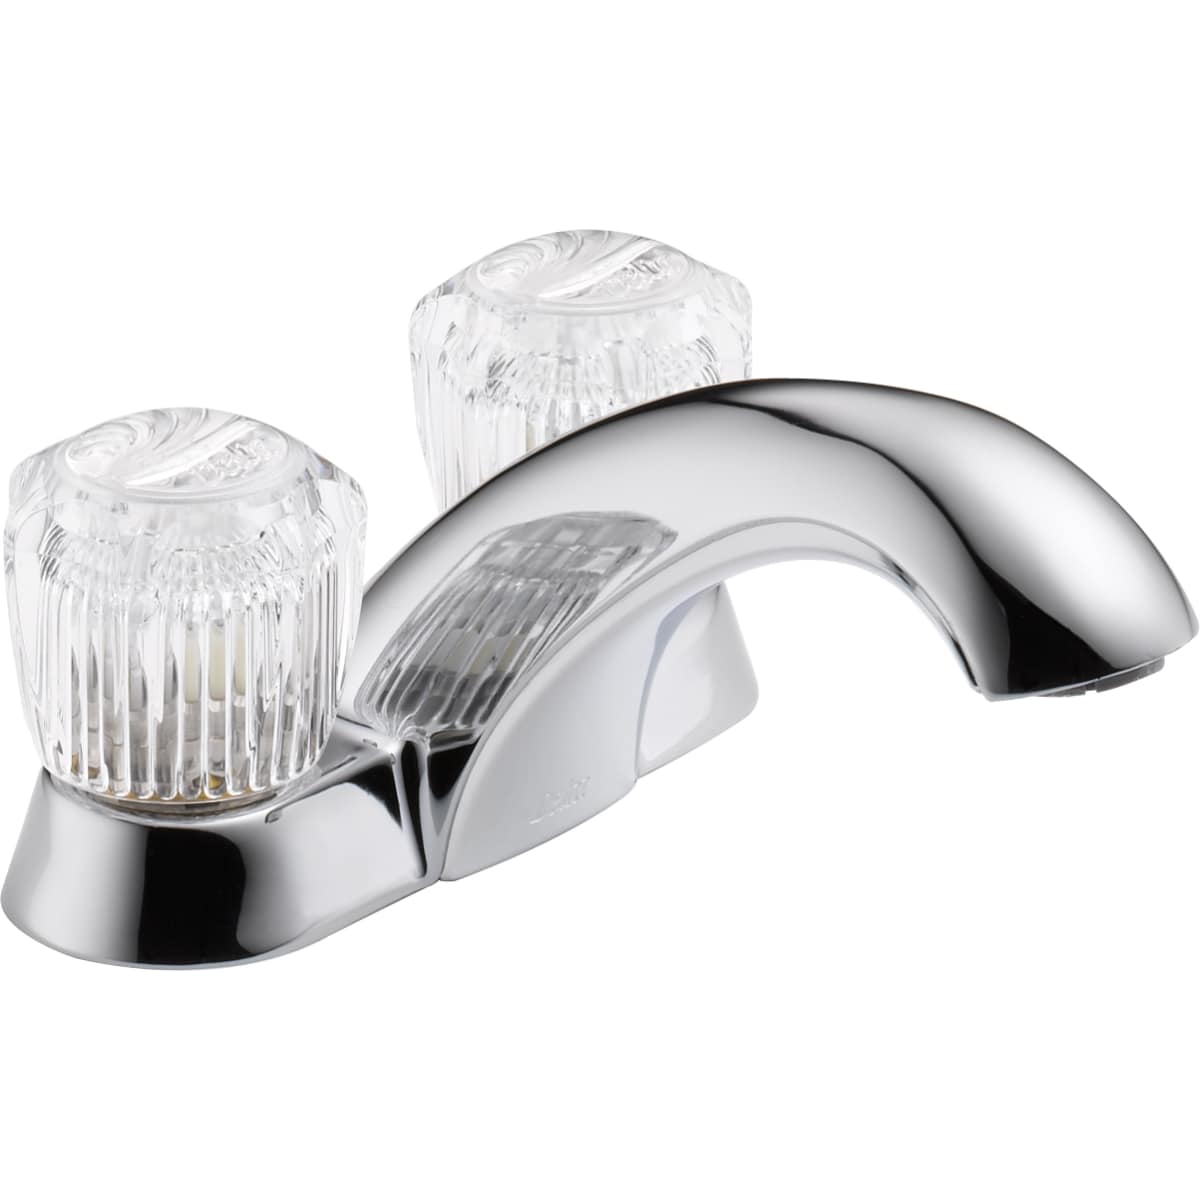 Delta 2512lf Chrome Classic Centerset Bathroom Faucet Includes